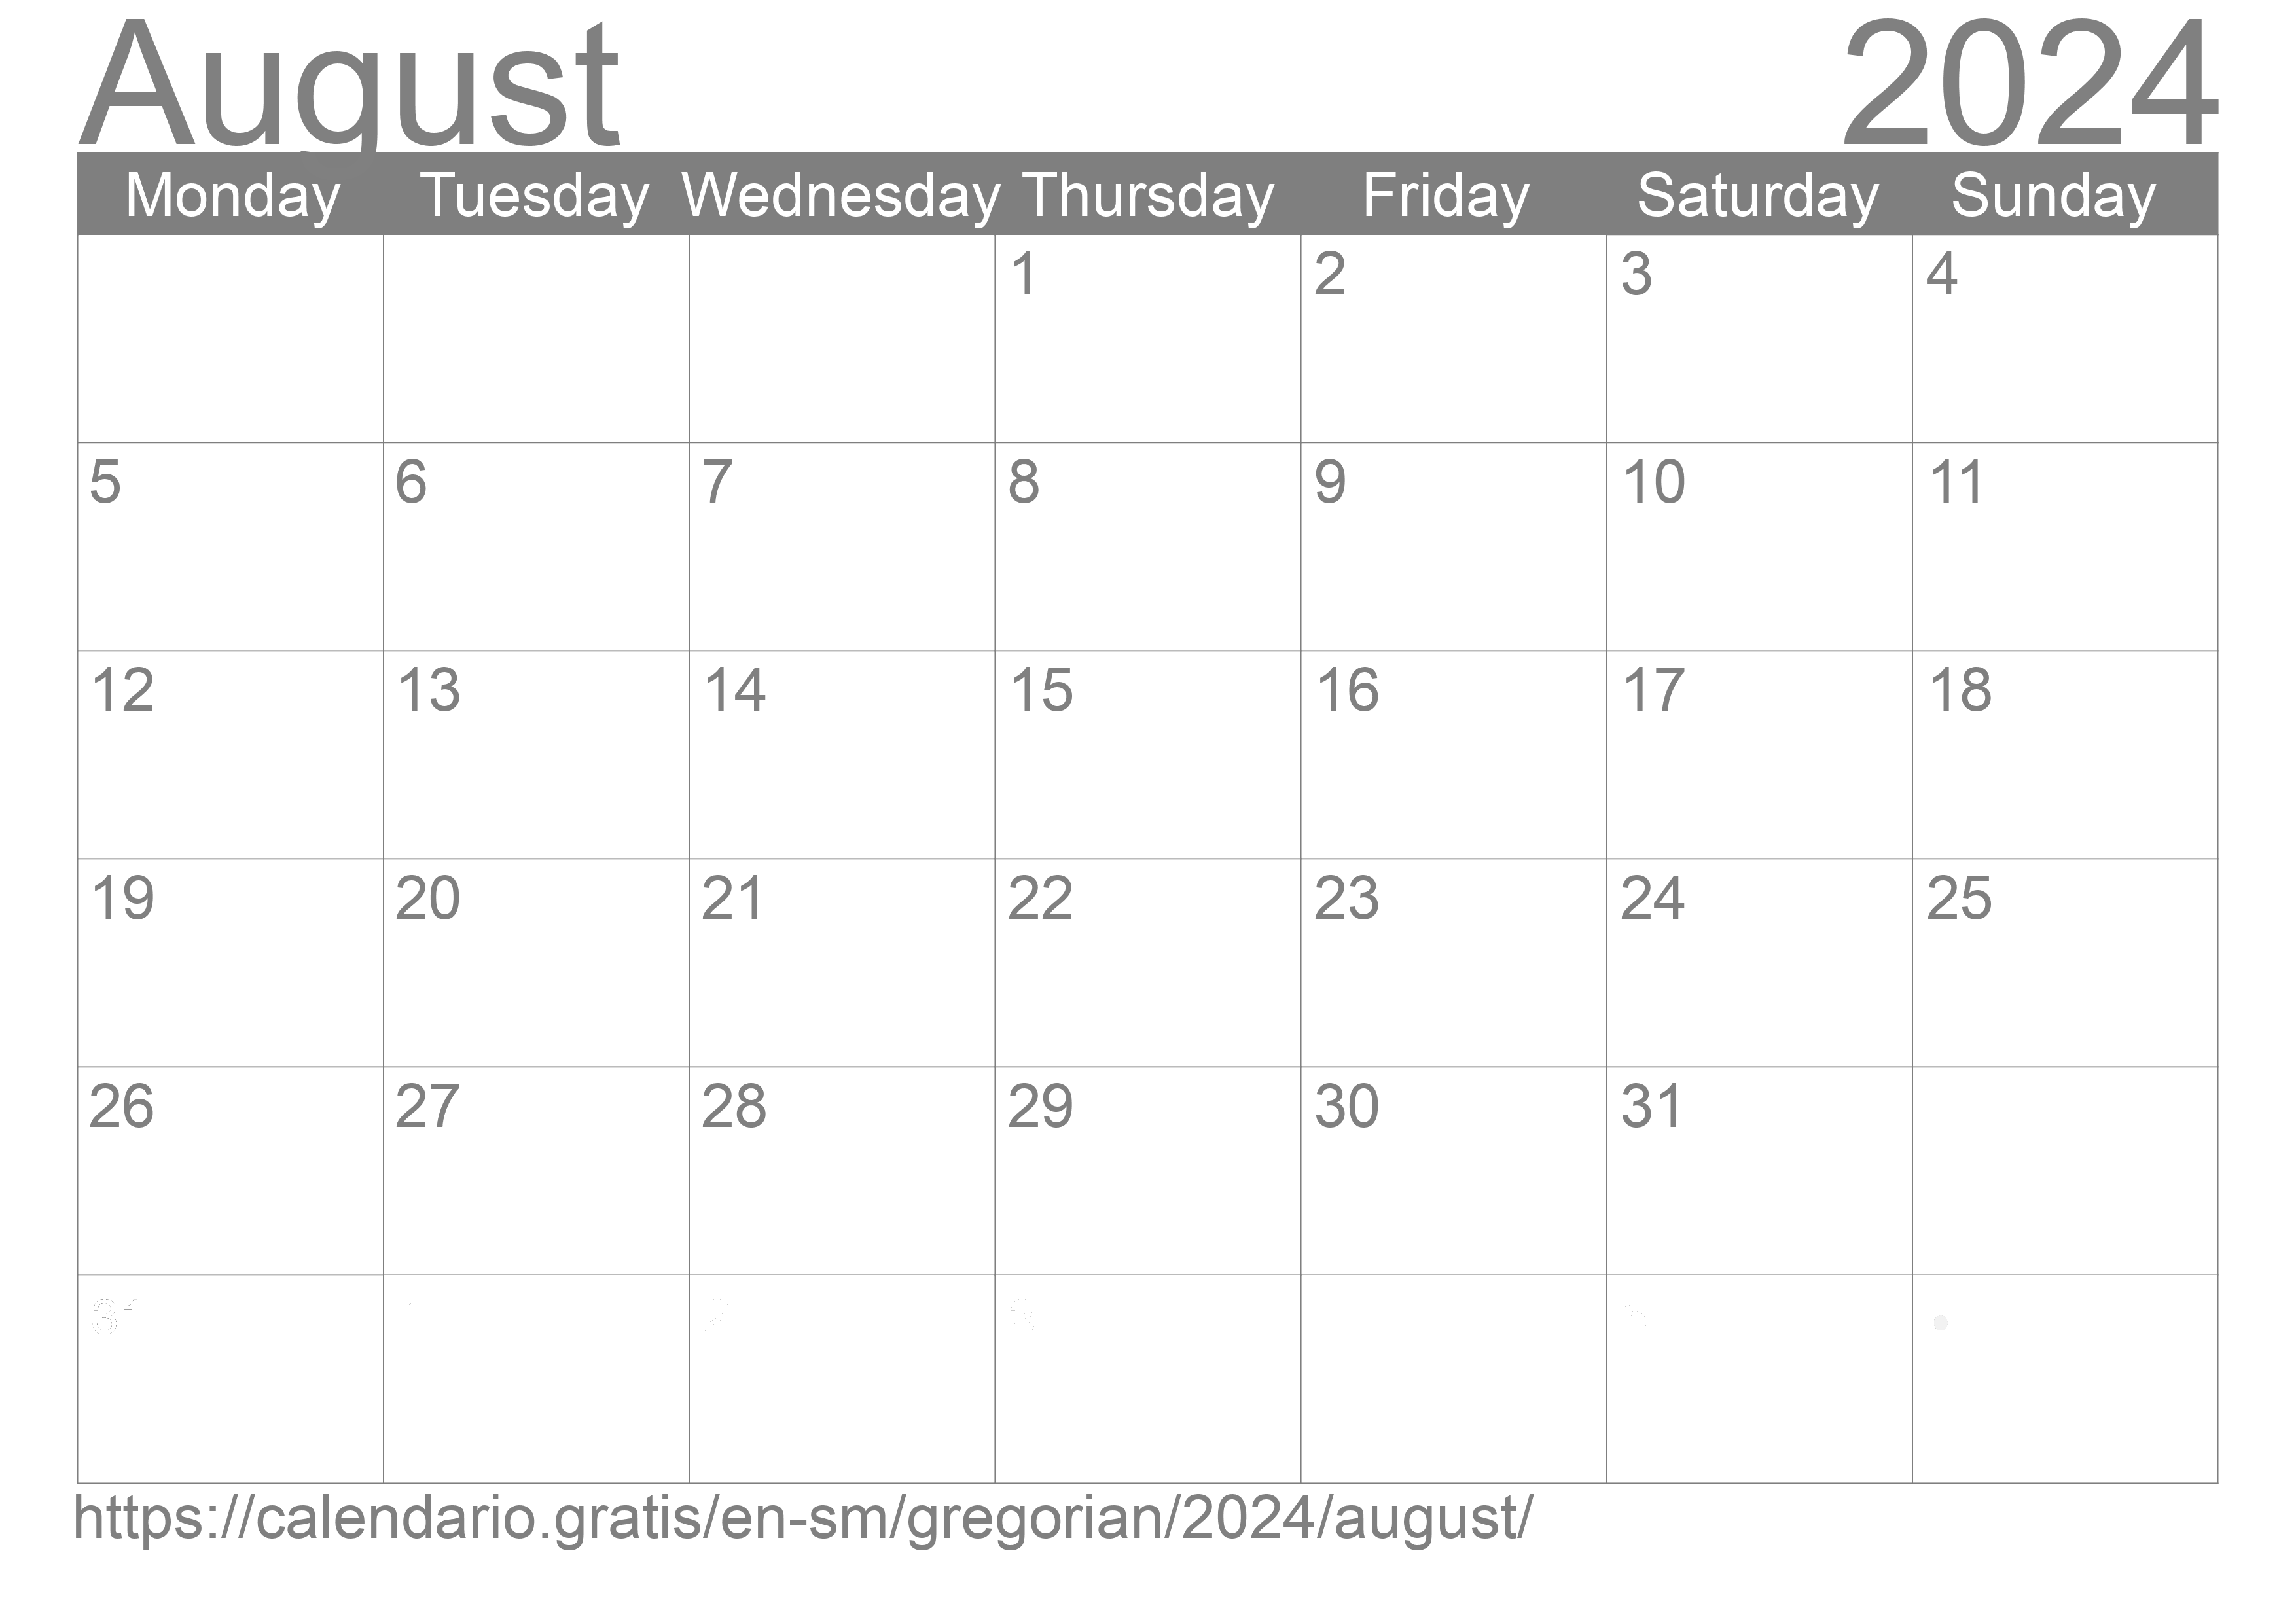 Calendar August 2024 to print